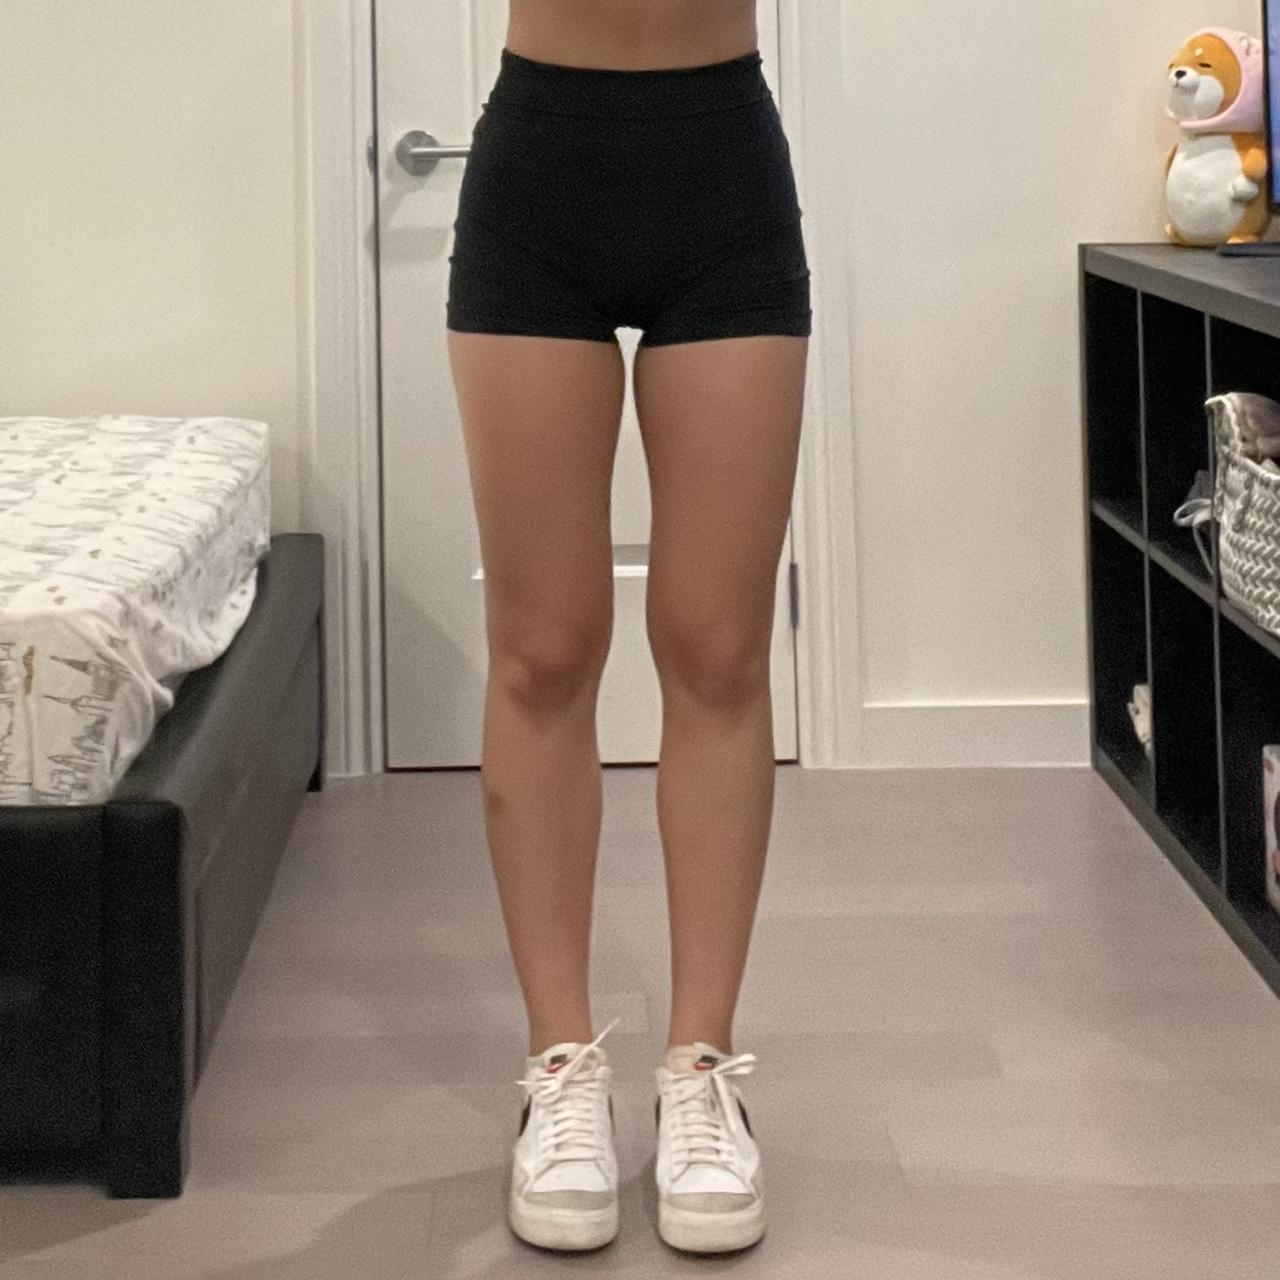 black workout shorts- size small
- super...